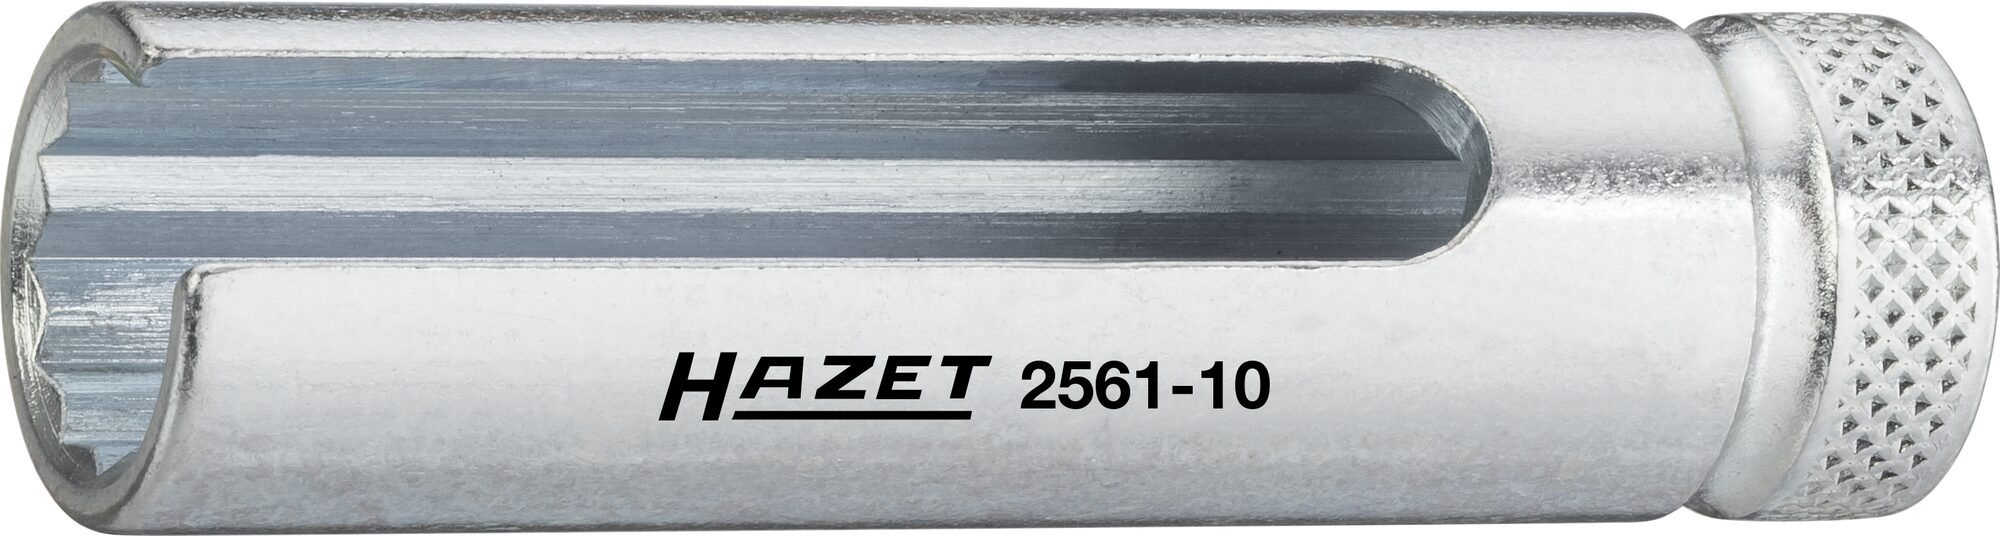 HAZET Turbolader Steckschlüsseleinsatz ∙ Doppelsechskant 2561-10 ∙ Vierkant6,3 mm (1/4 Zoll) ∙ Außen-Doppel-Sechskant Profil ∙ 10 mm